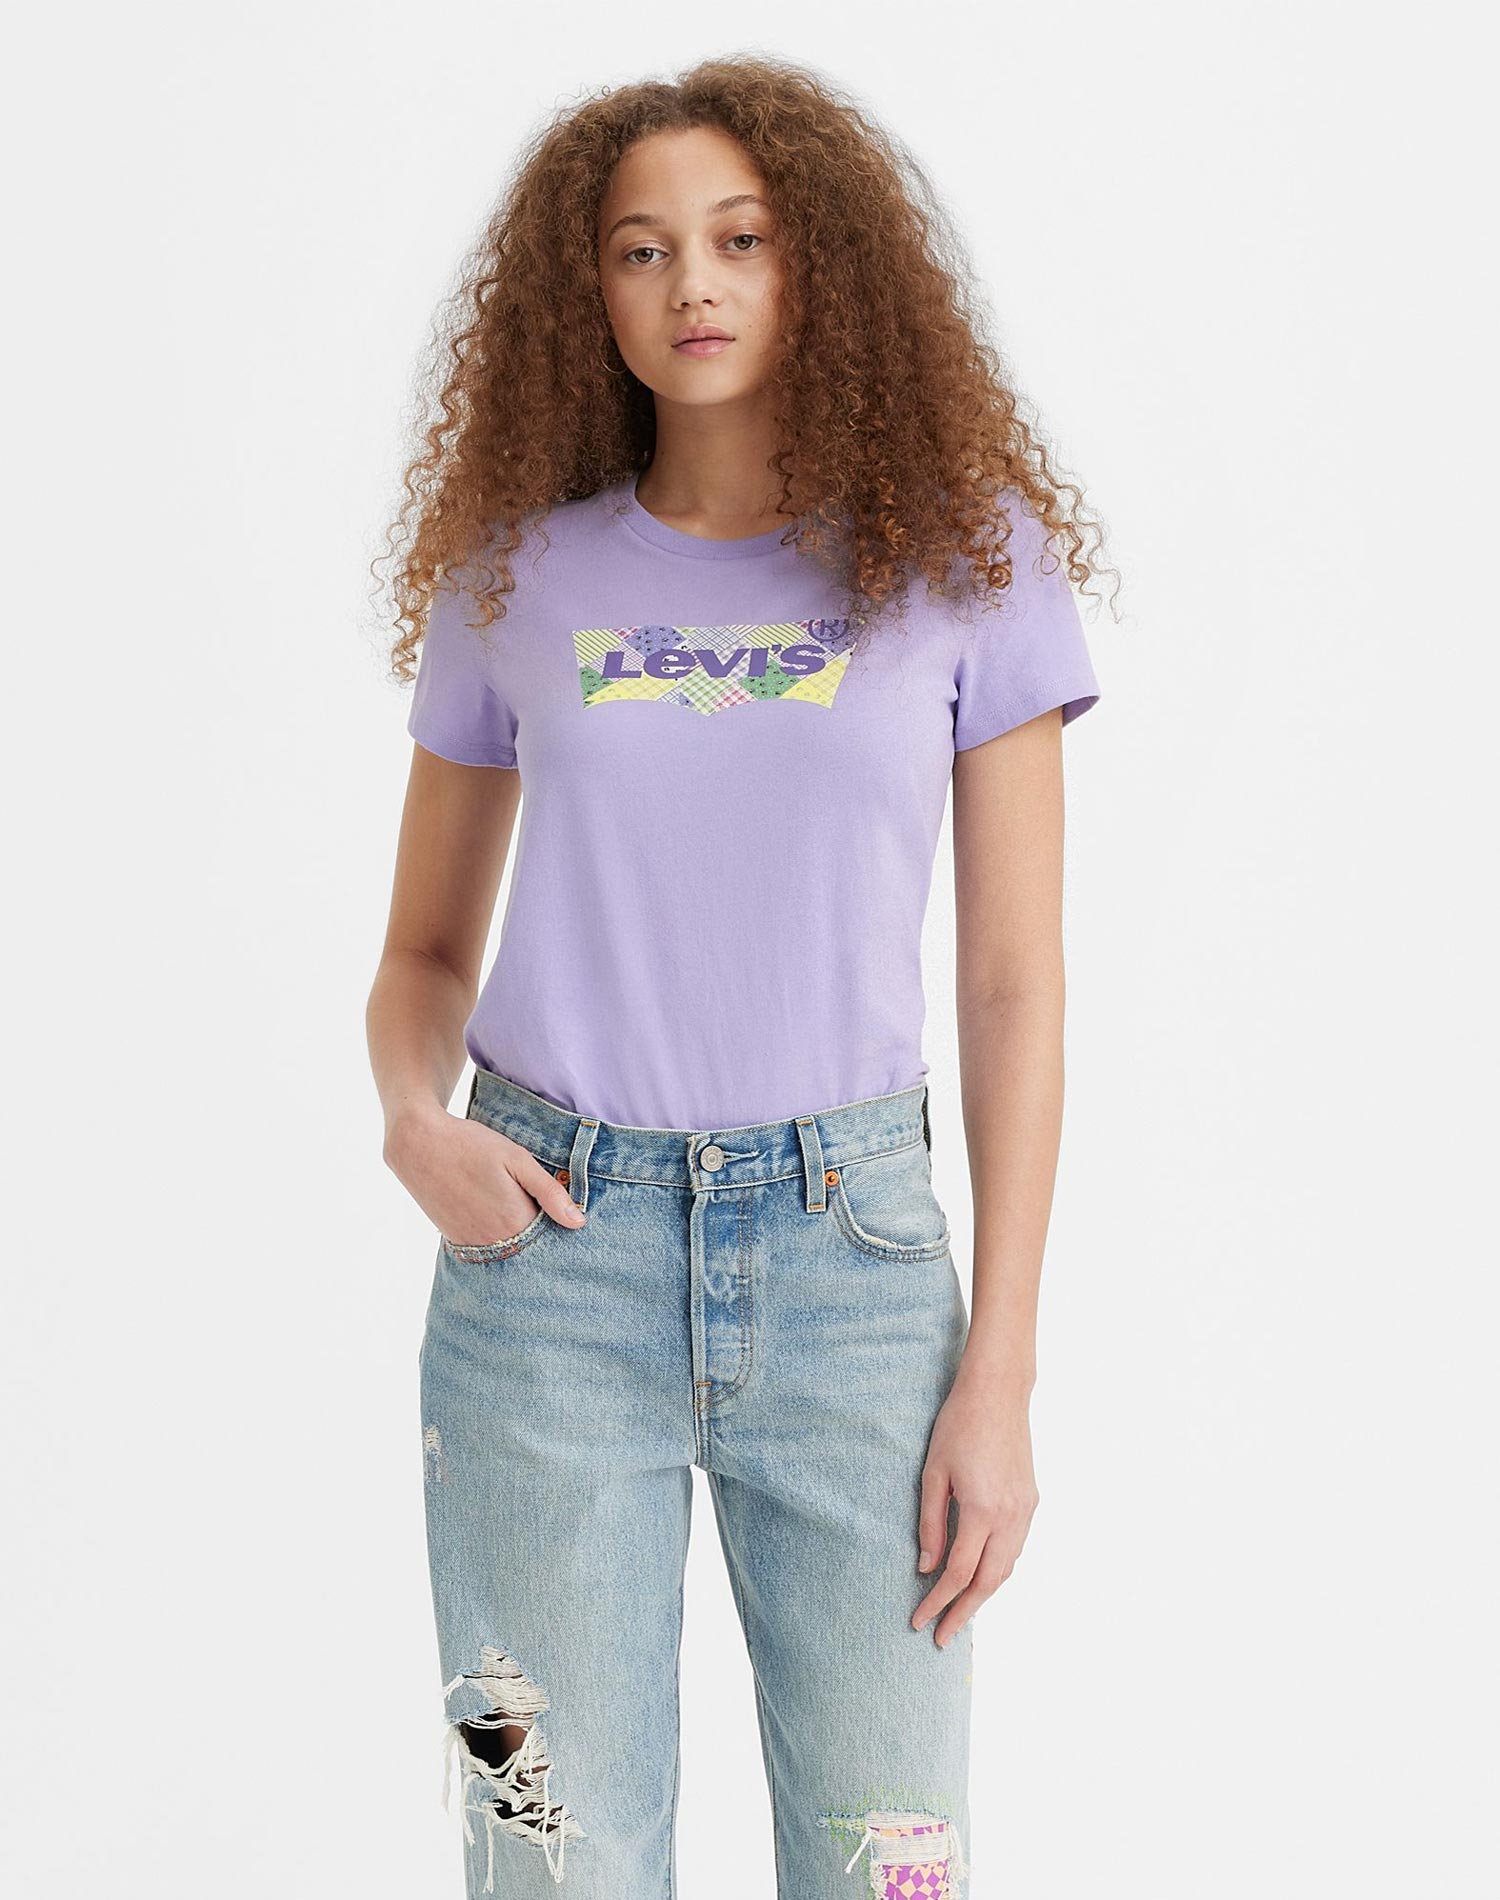 Levi's® camiseta de mujer de m/c 17369-2178 lila